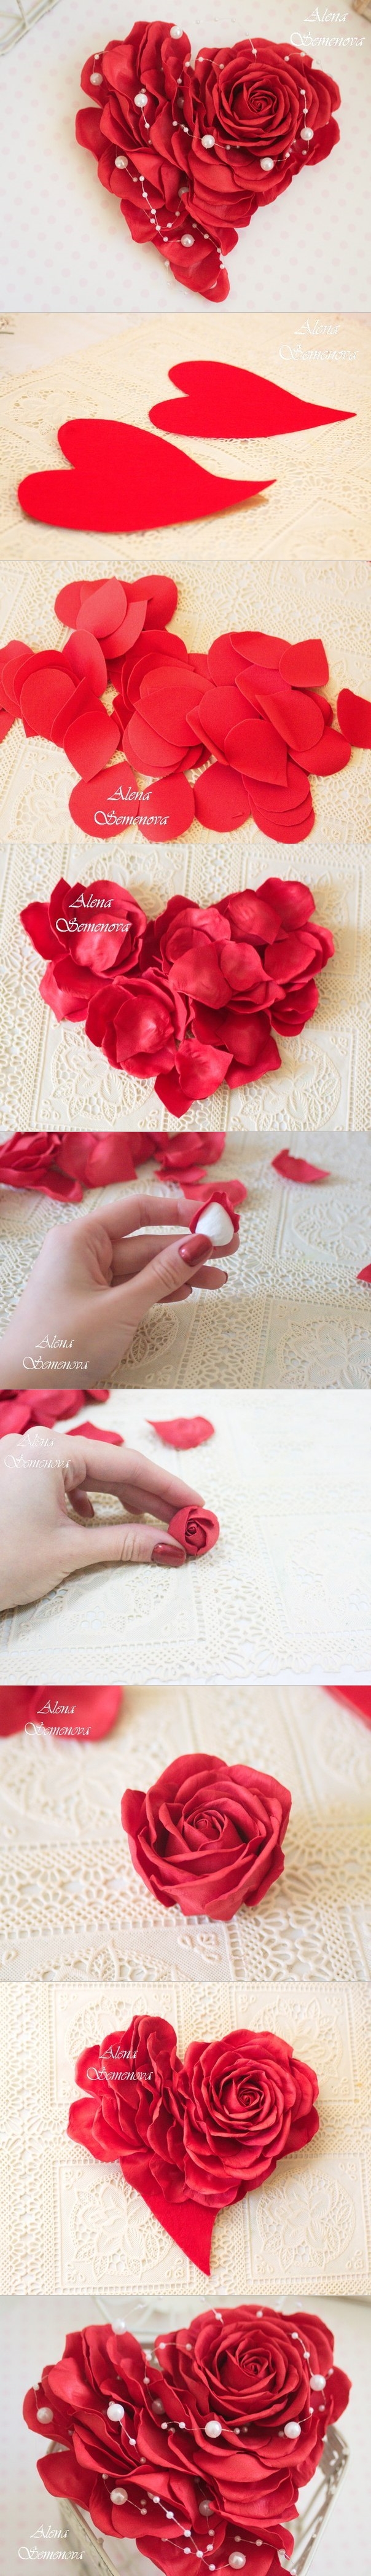 Valentine DIY Paper Rose Heart Wreath Wall Decor Tutorial